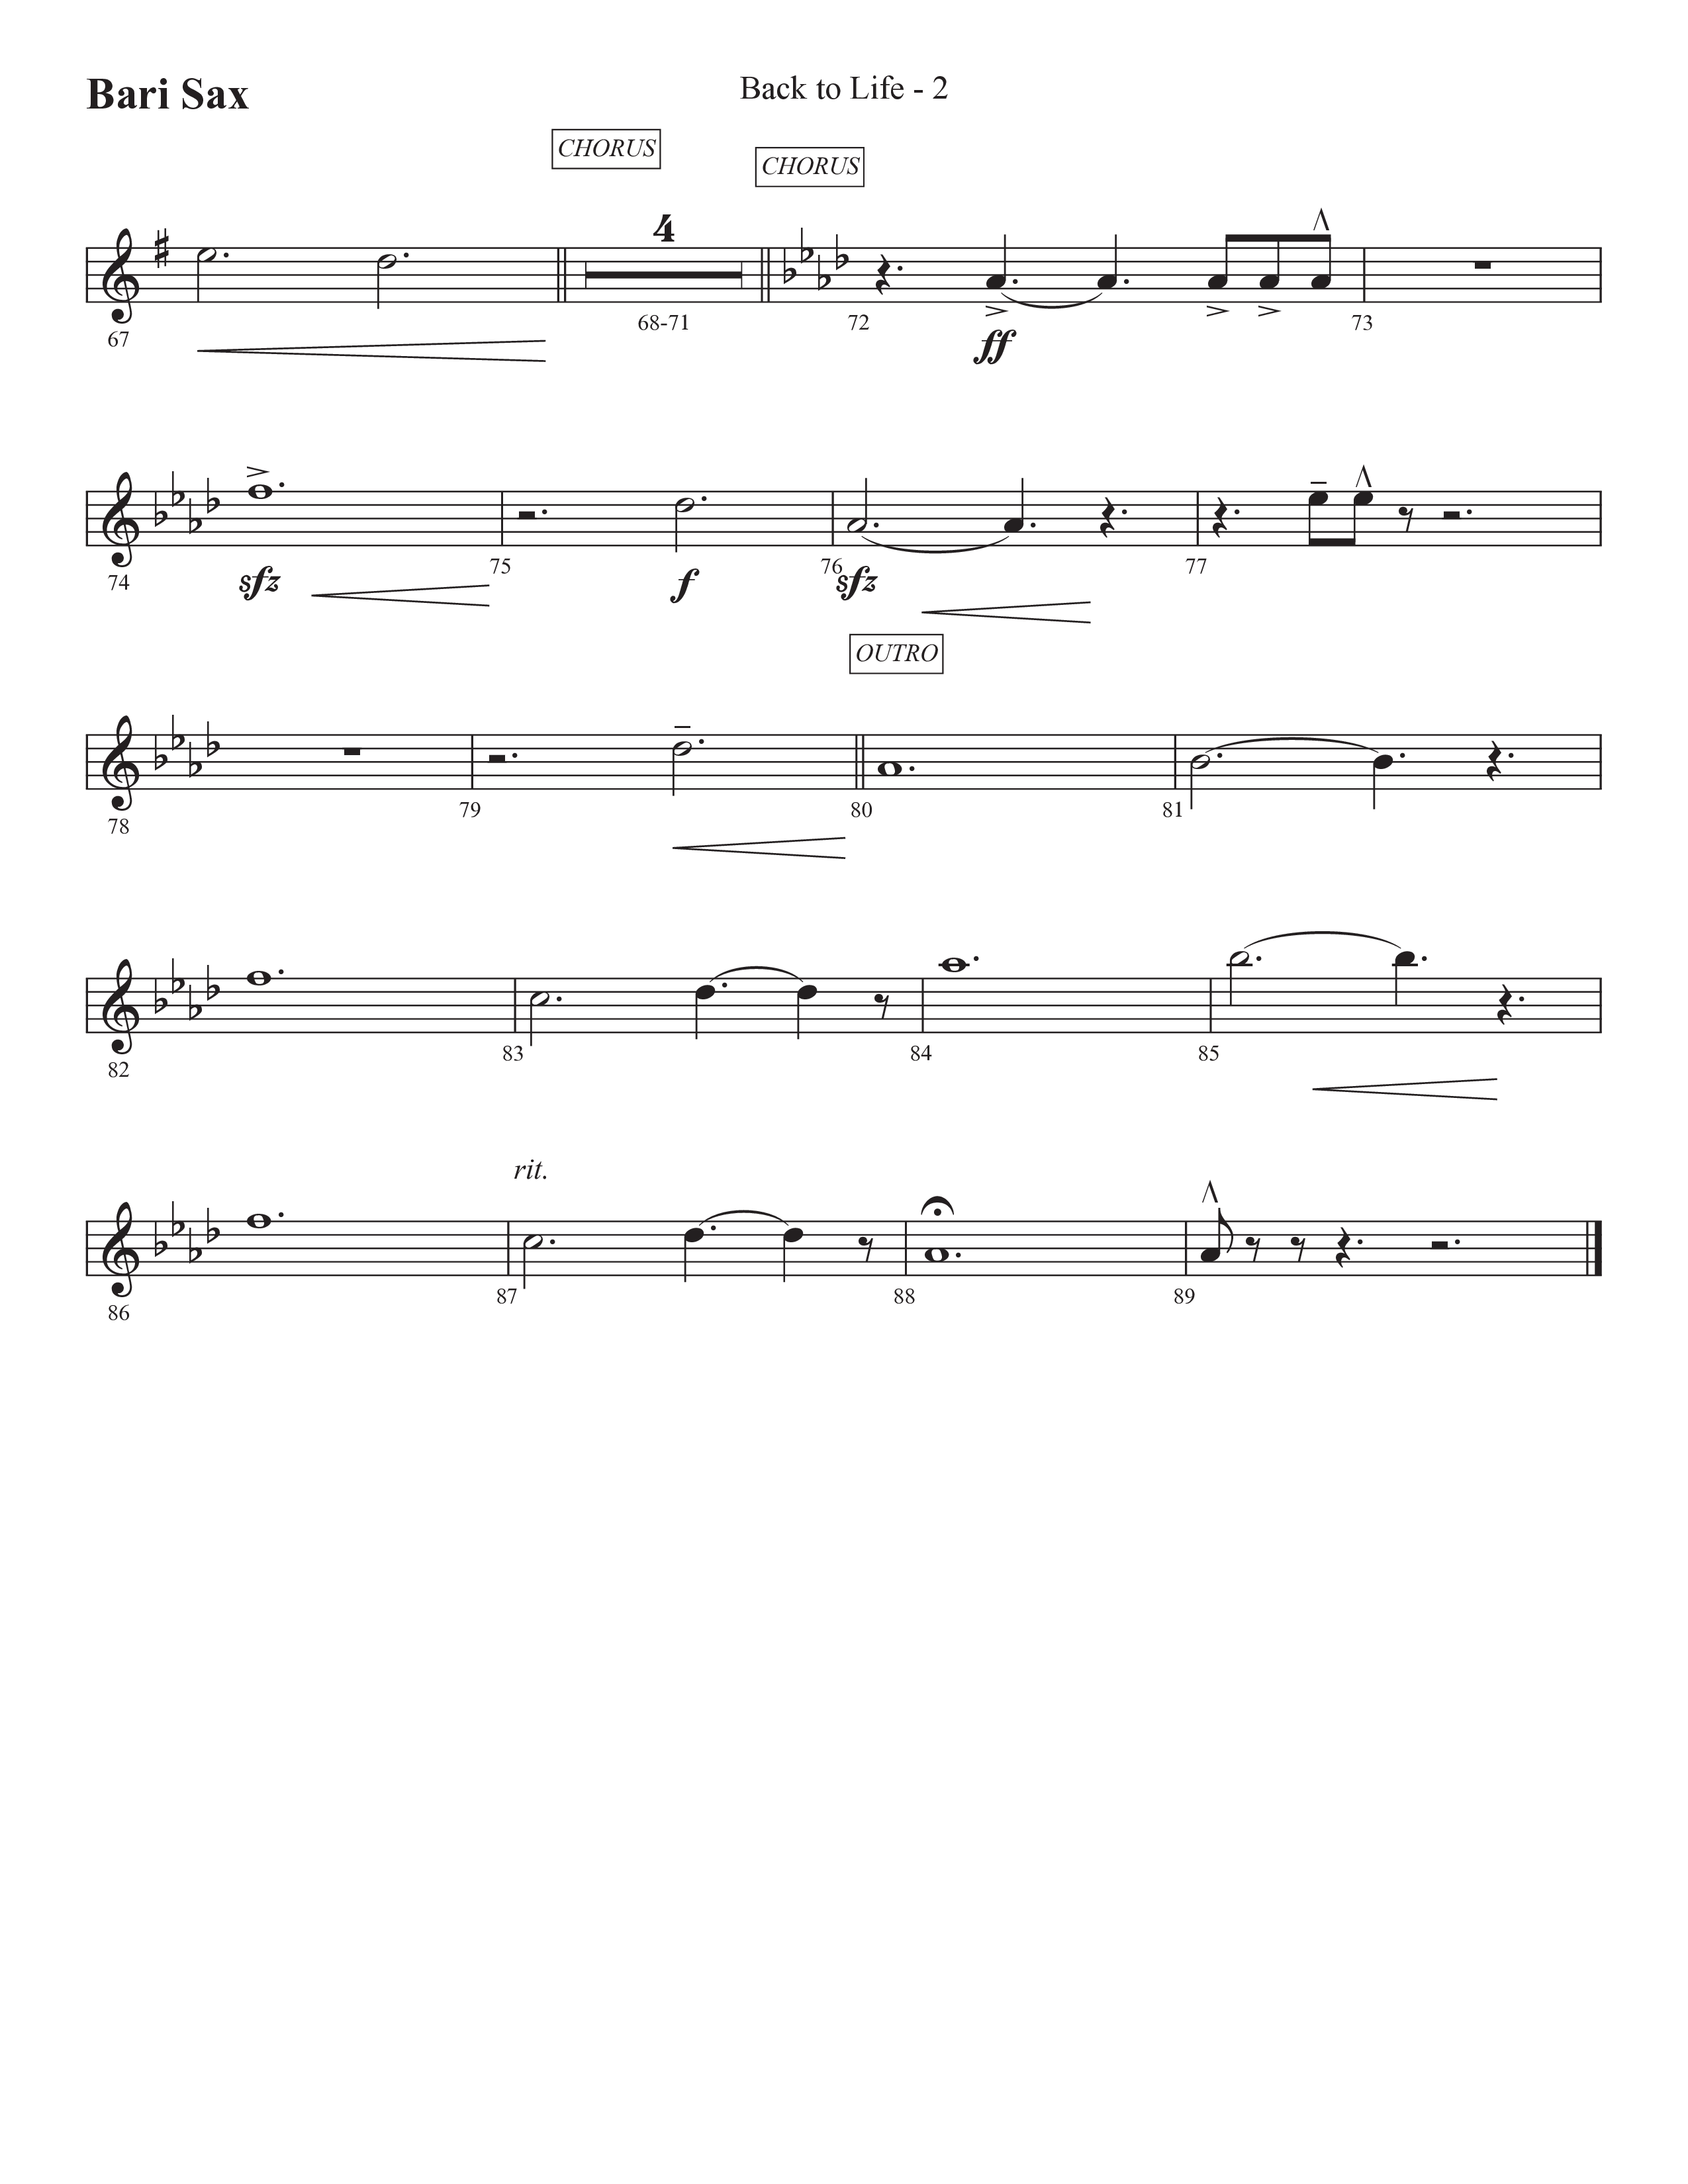 Back To Life (Choral Anthem SATB) Bari Sax (Prestonwood Worship / Prestonwood Choir / Arr. Carson Wagner)